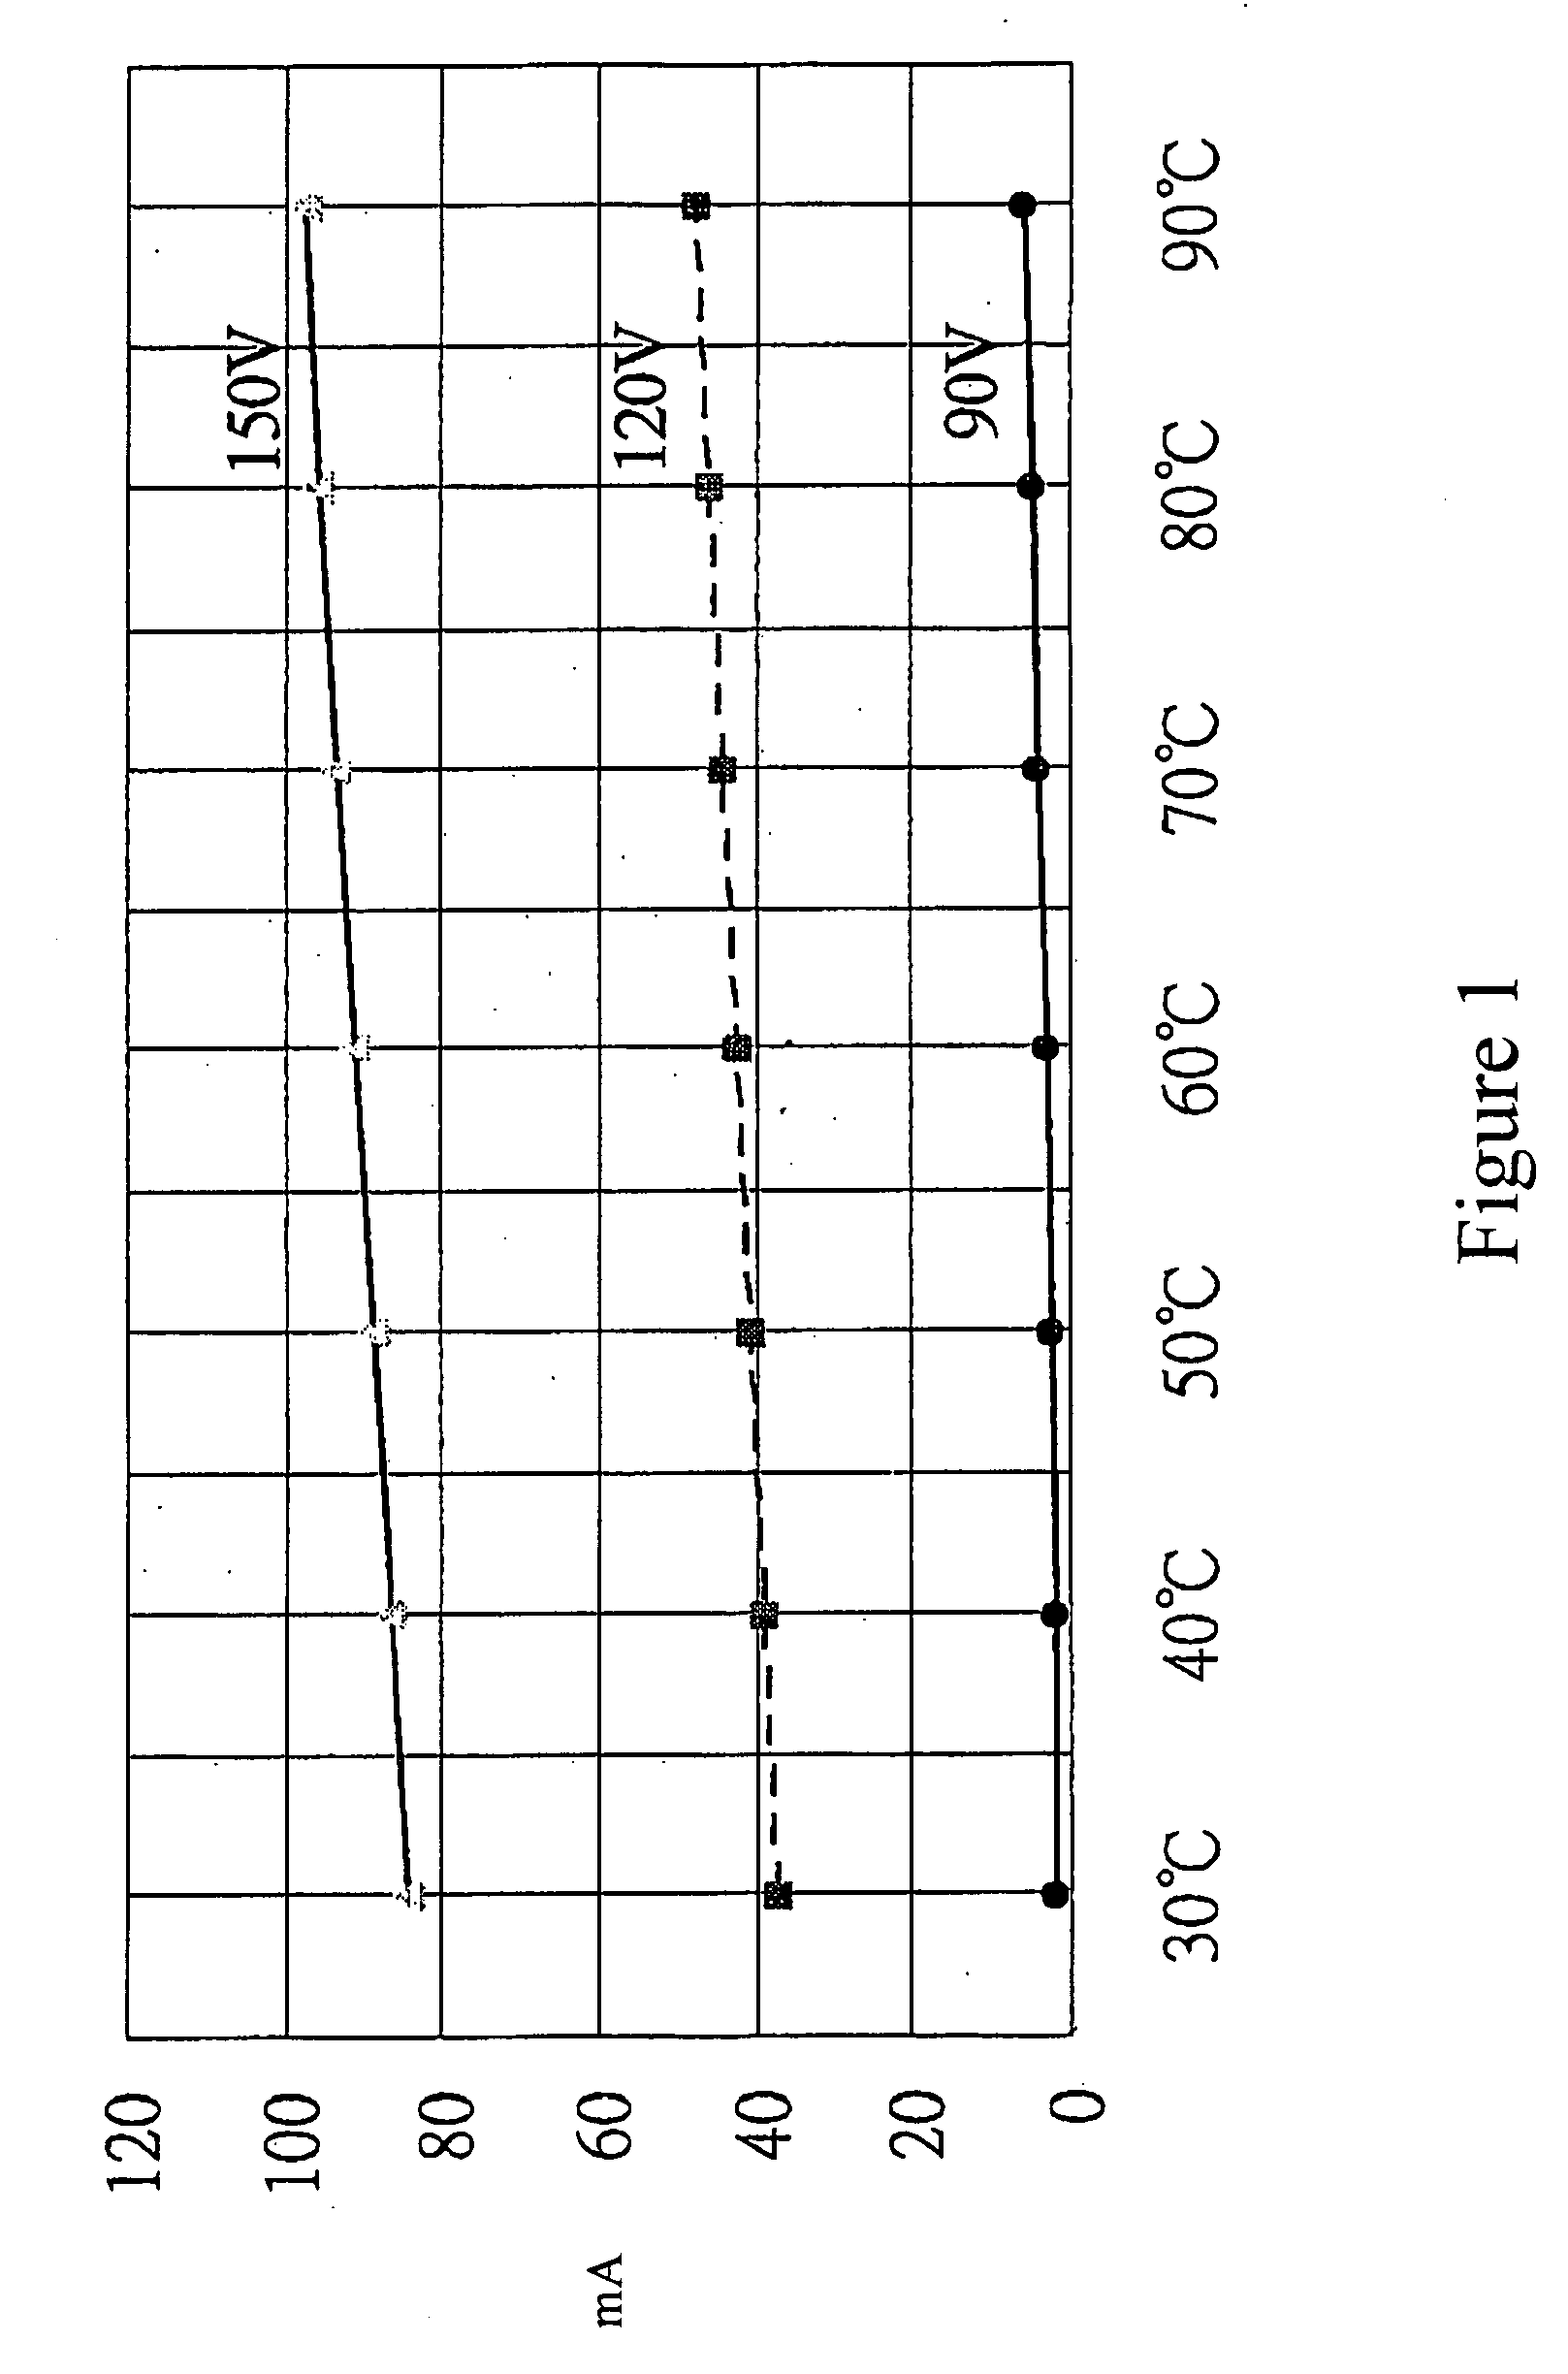 Method for Measuring PN-Junction Temperature of Light-Emitting Diode (LED)